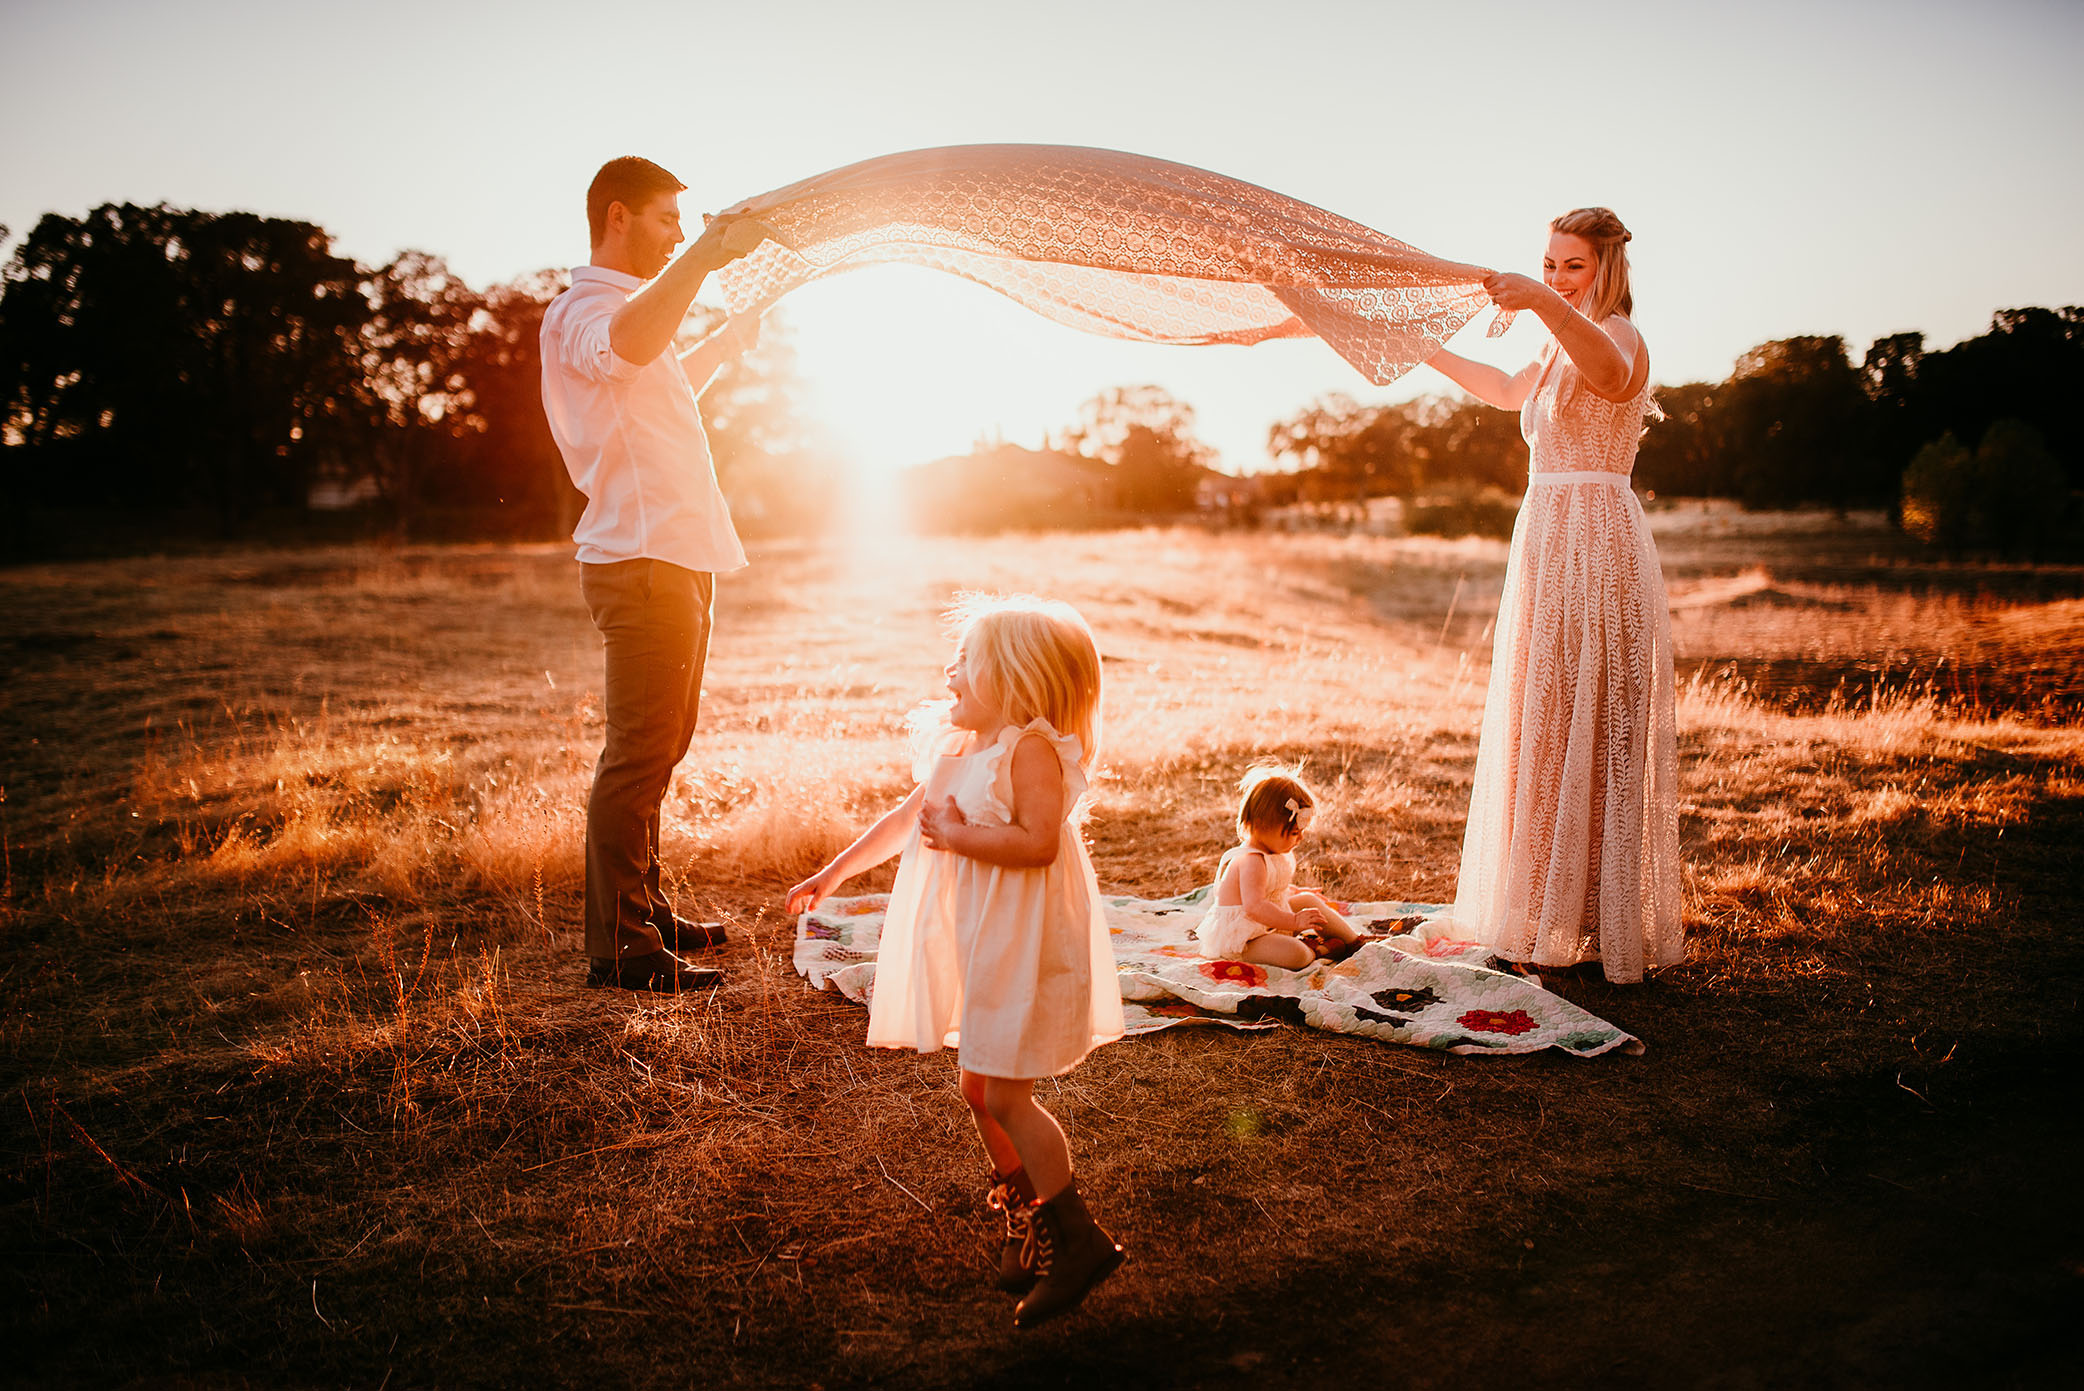 A family plays | Sweet Beginnings Photography by Stephanie | Sacramento Area Family Photographer